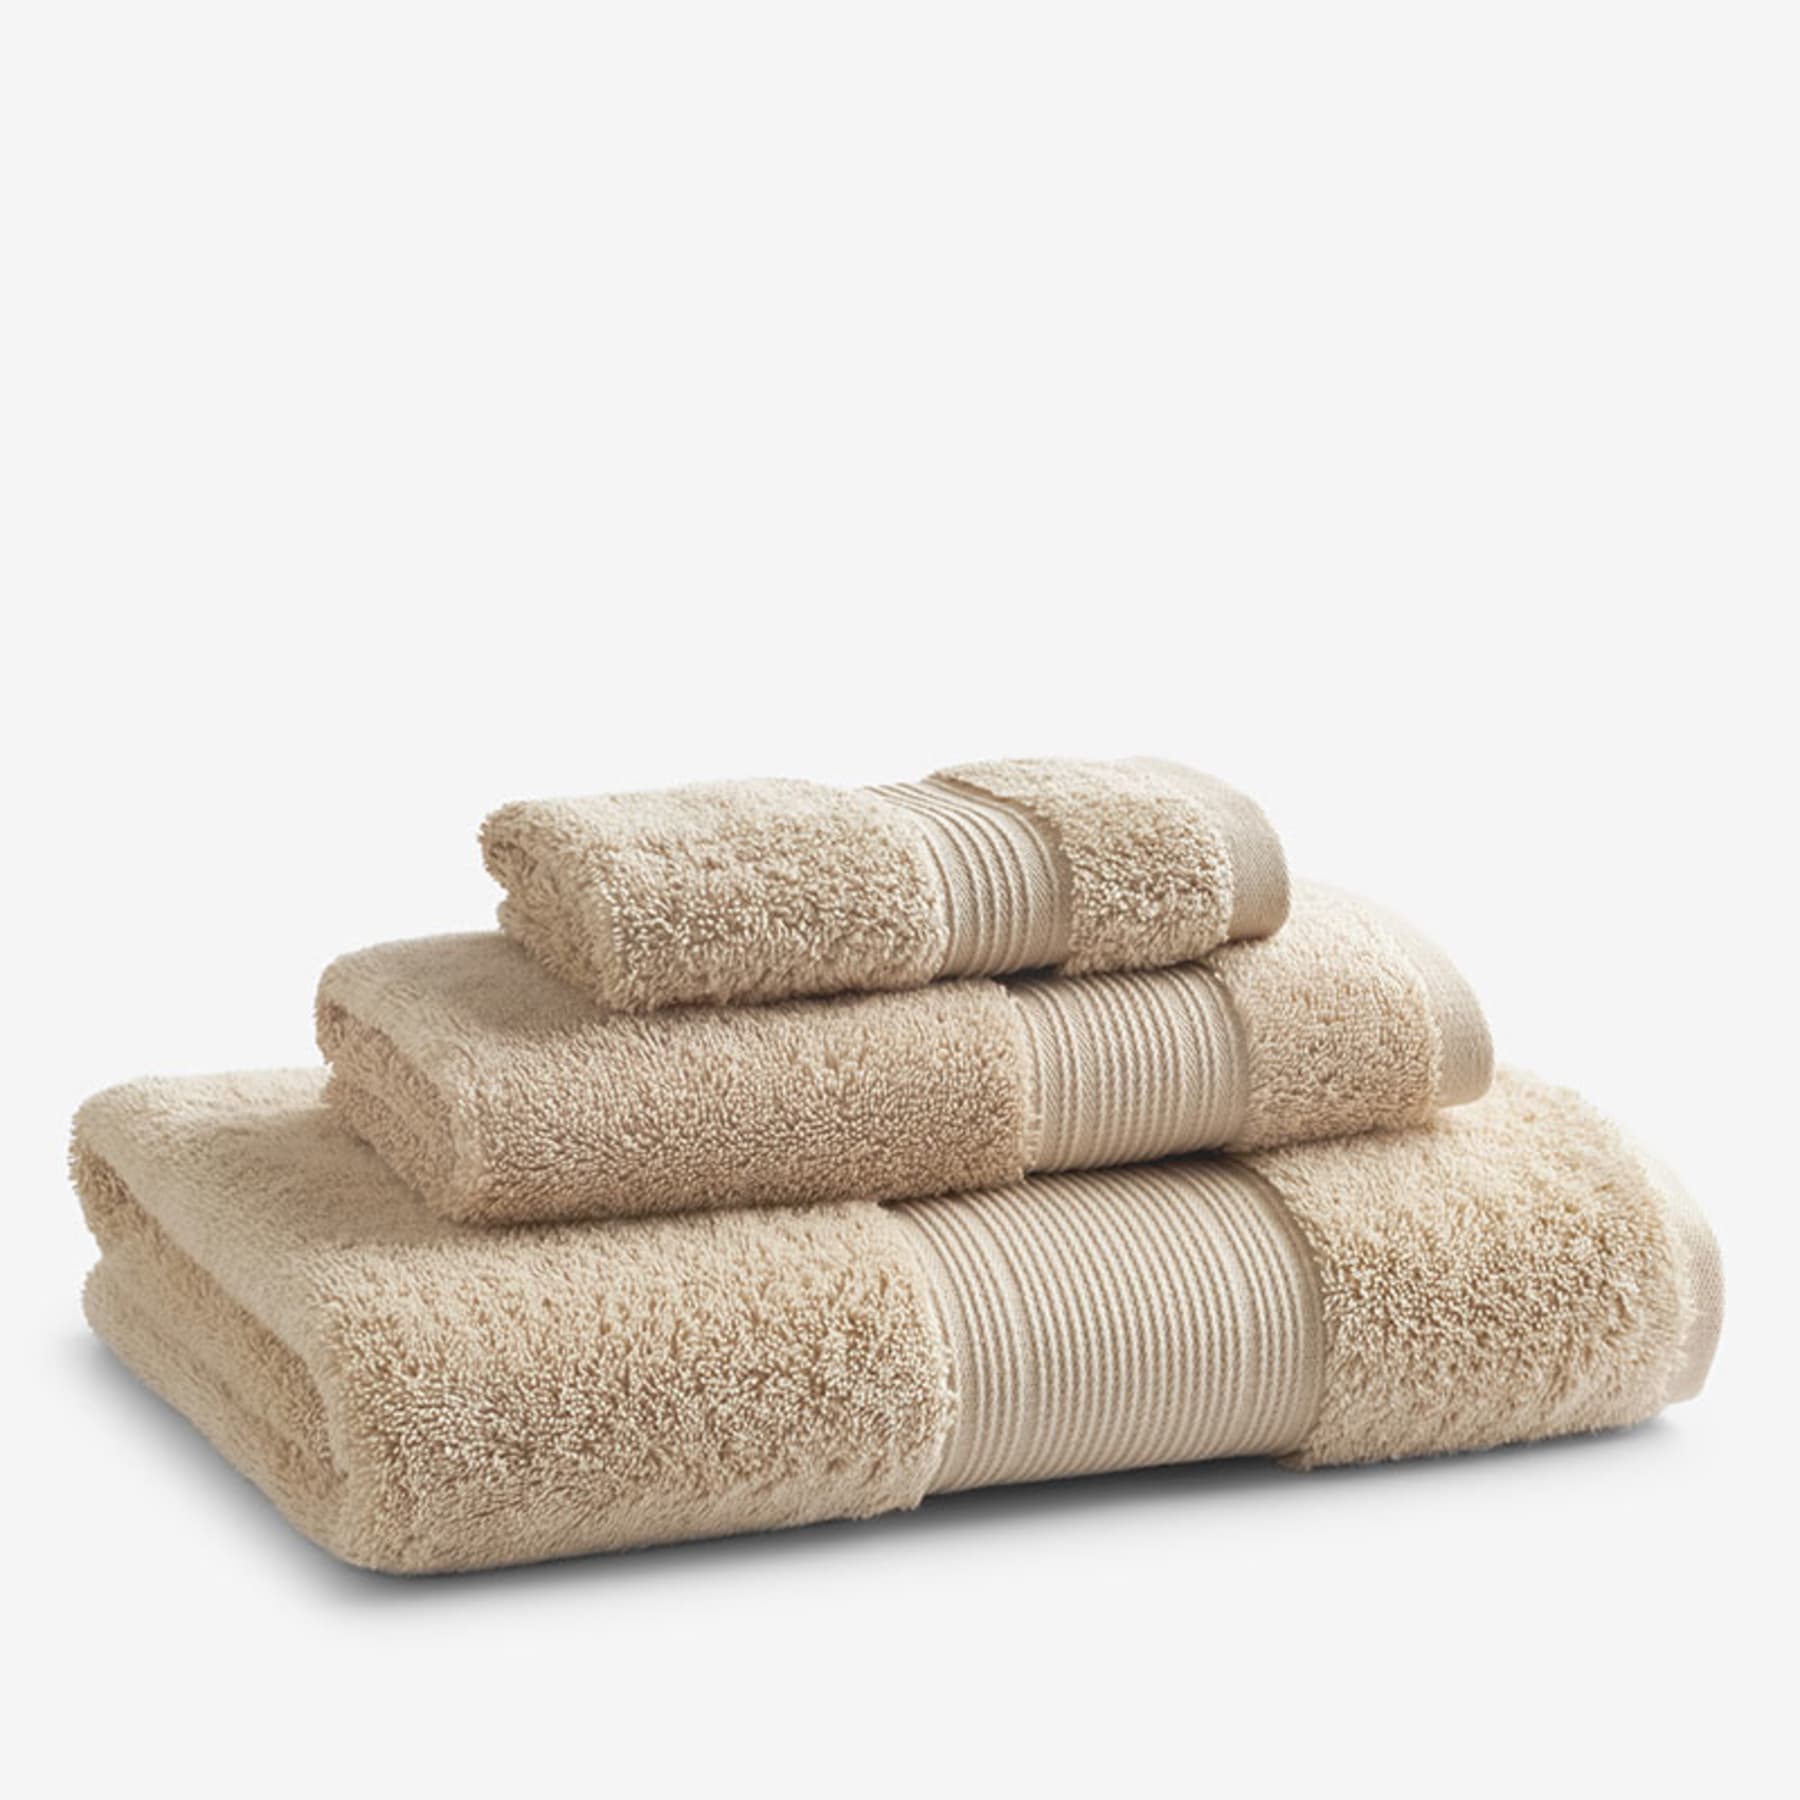 Regal Egyptian Cotton Bath Towel - Linen | The Company Store